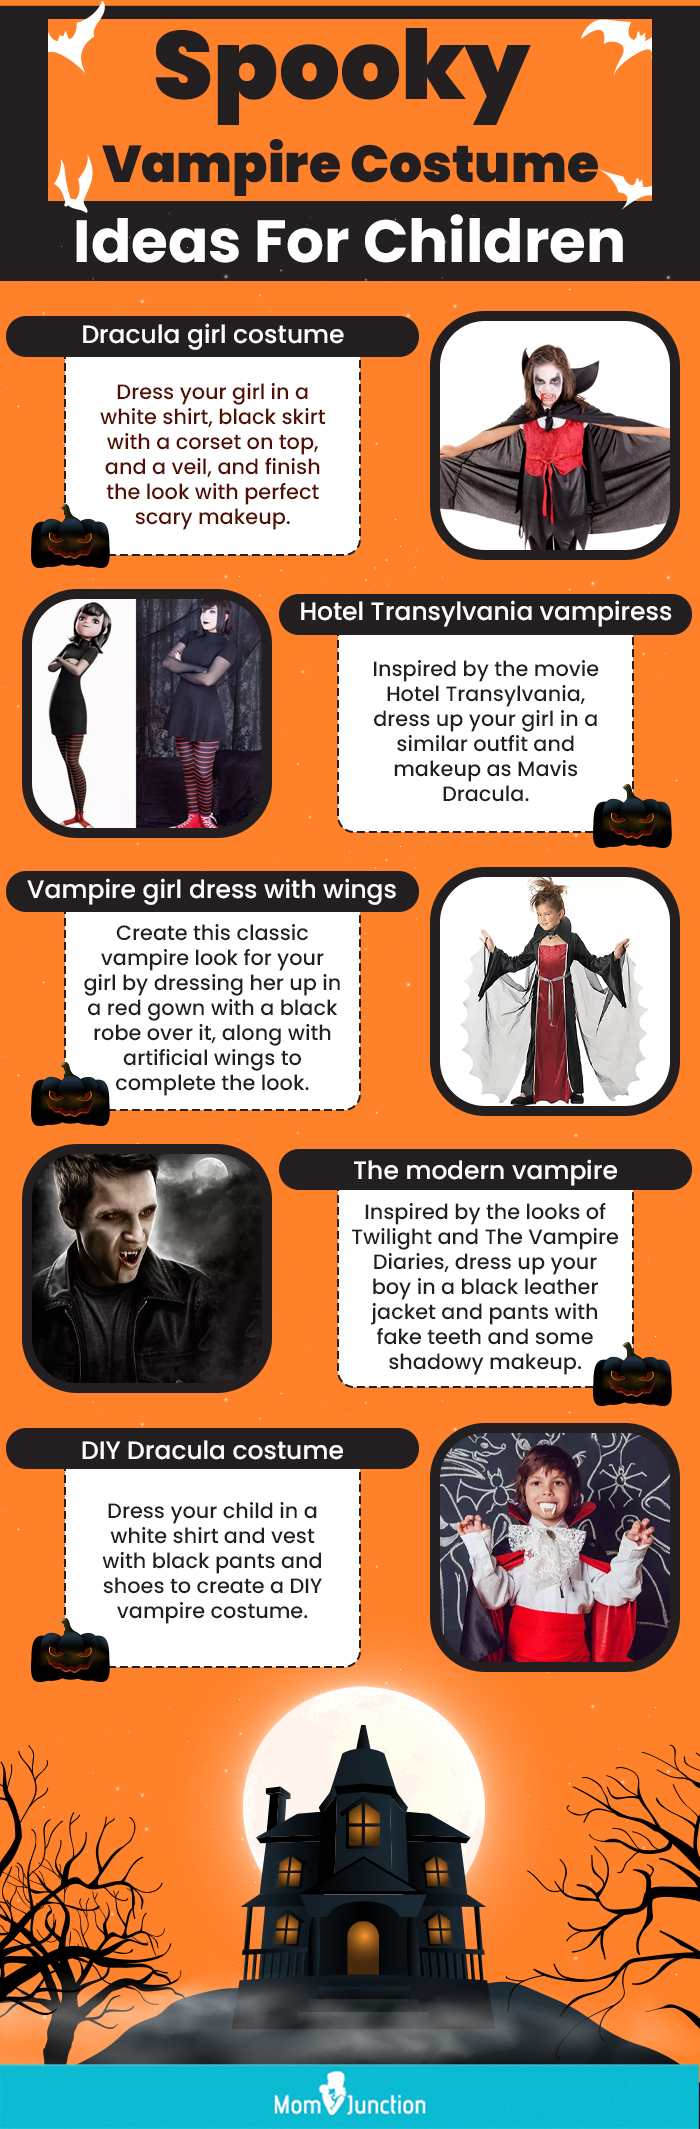 Spooky Vampire Costume Ideas For Children (infographic)